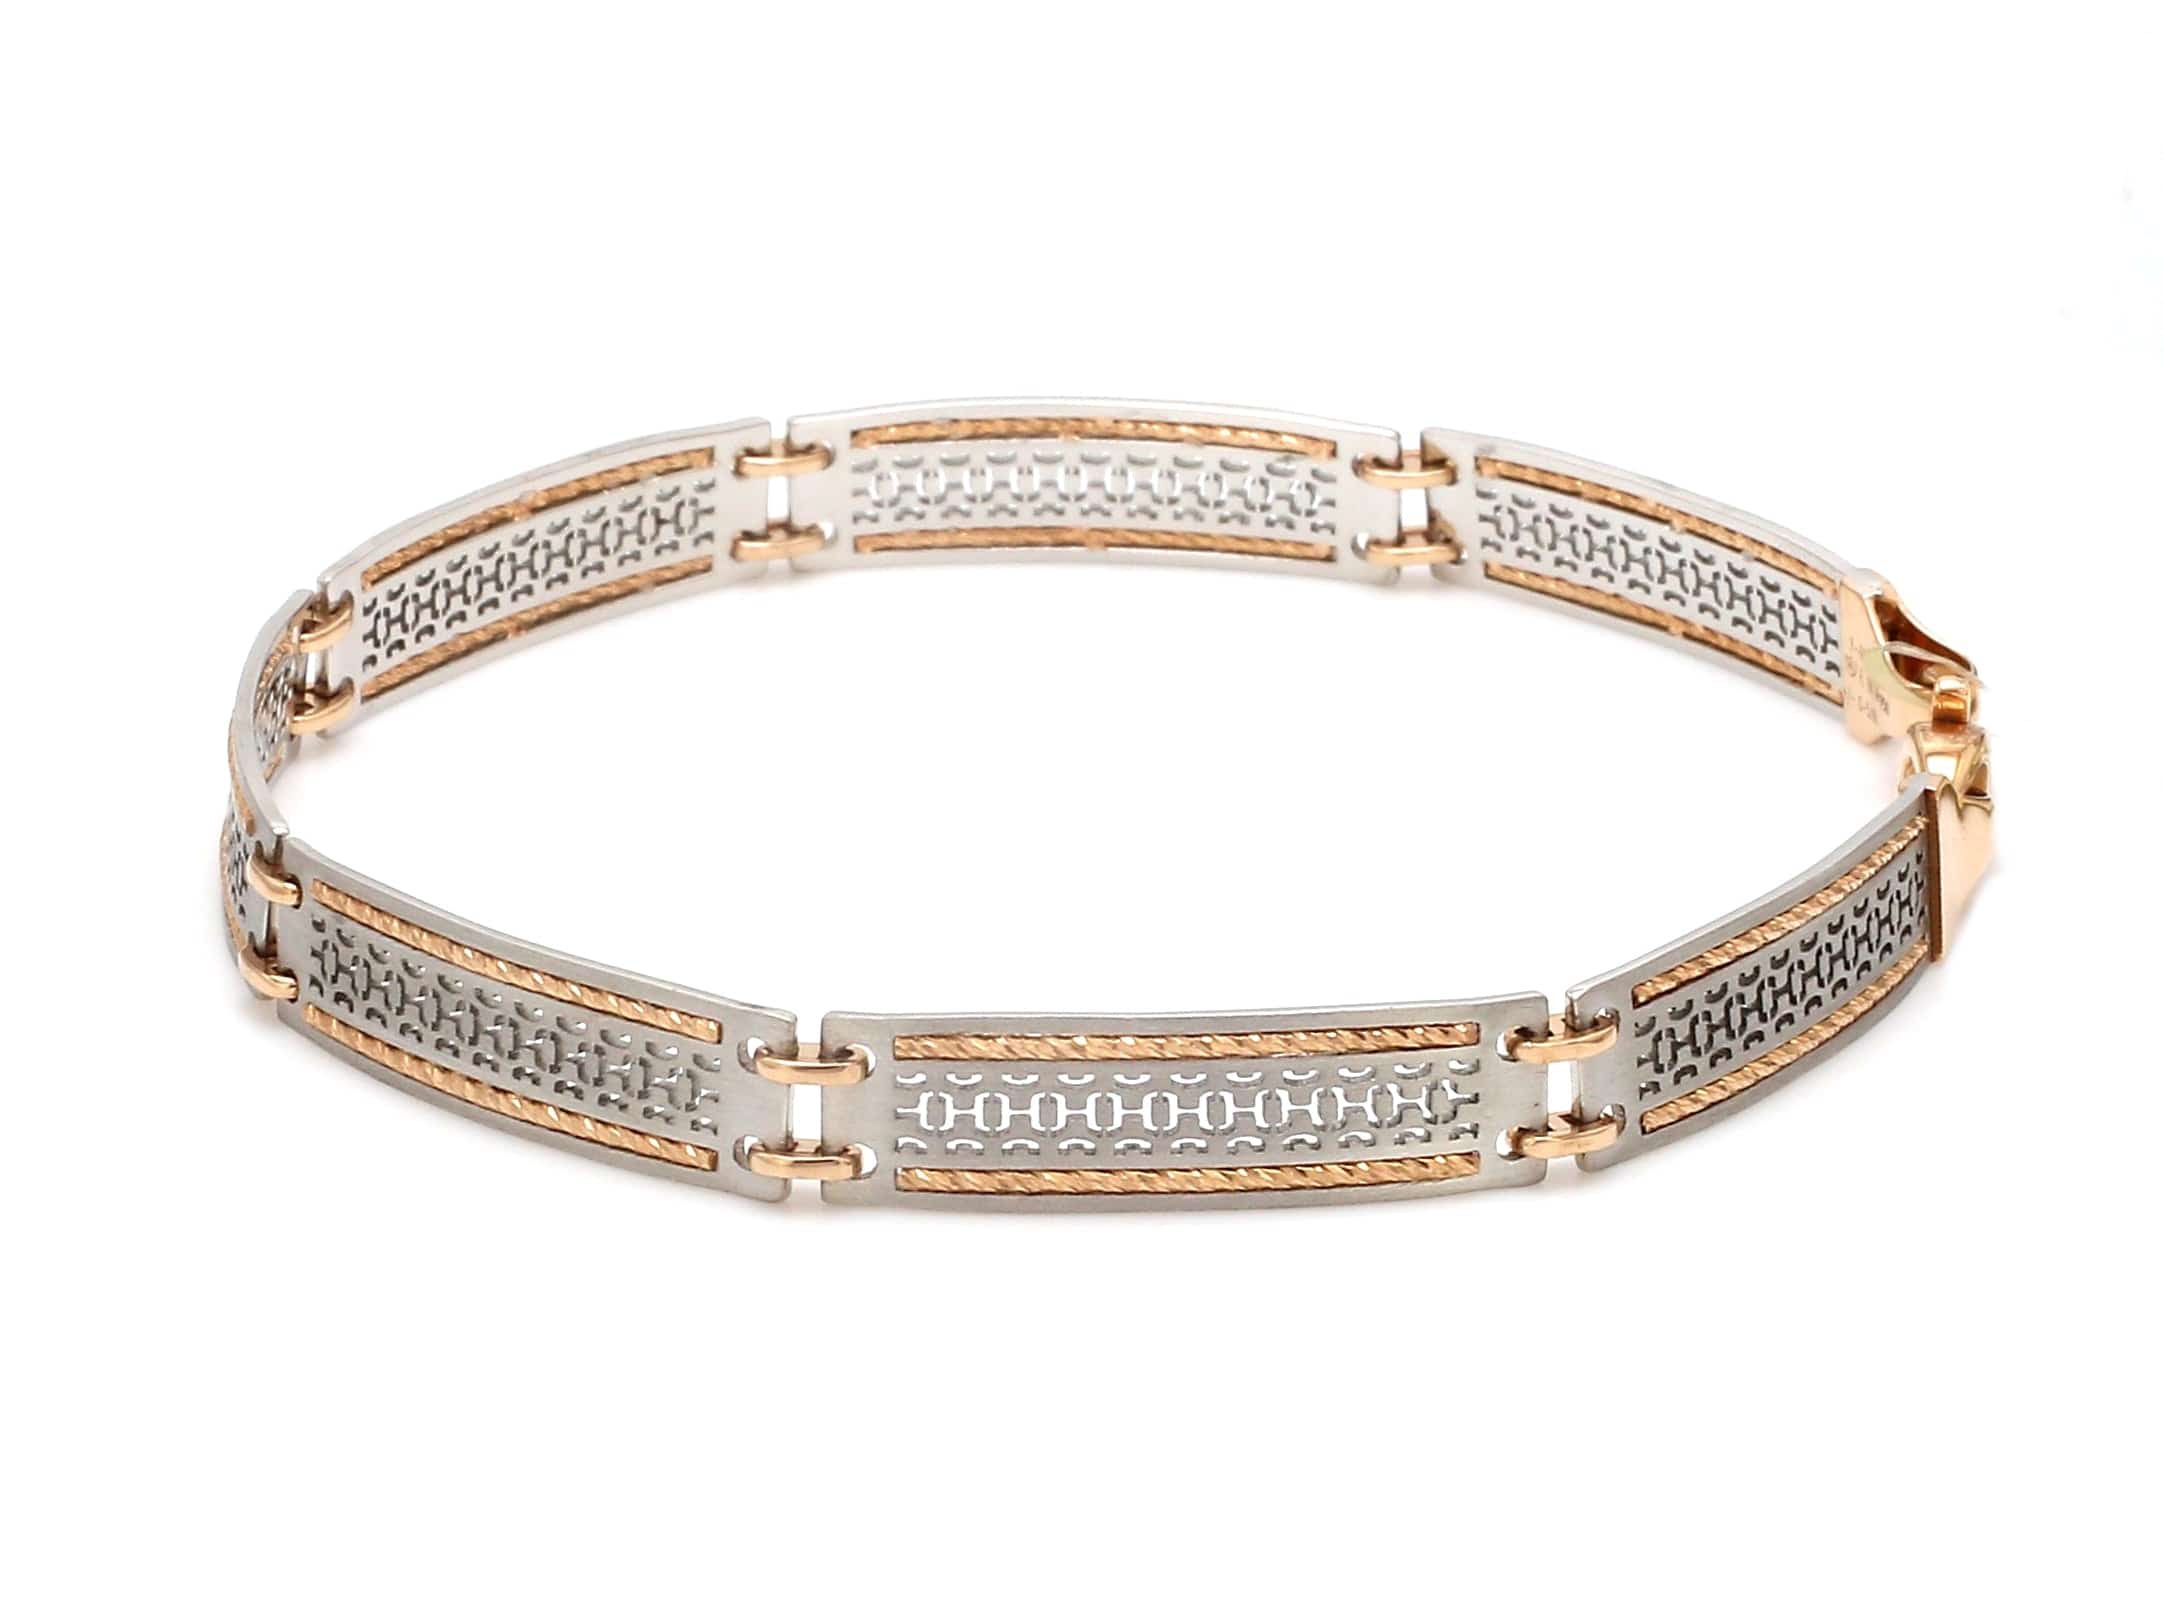 Mens Vs Icy White Gold Diamond Bracelet Bangle 5.05 Ct | eBay